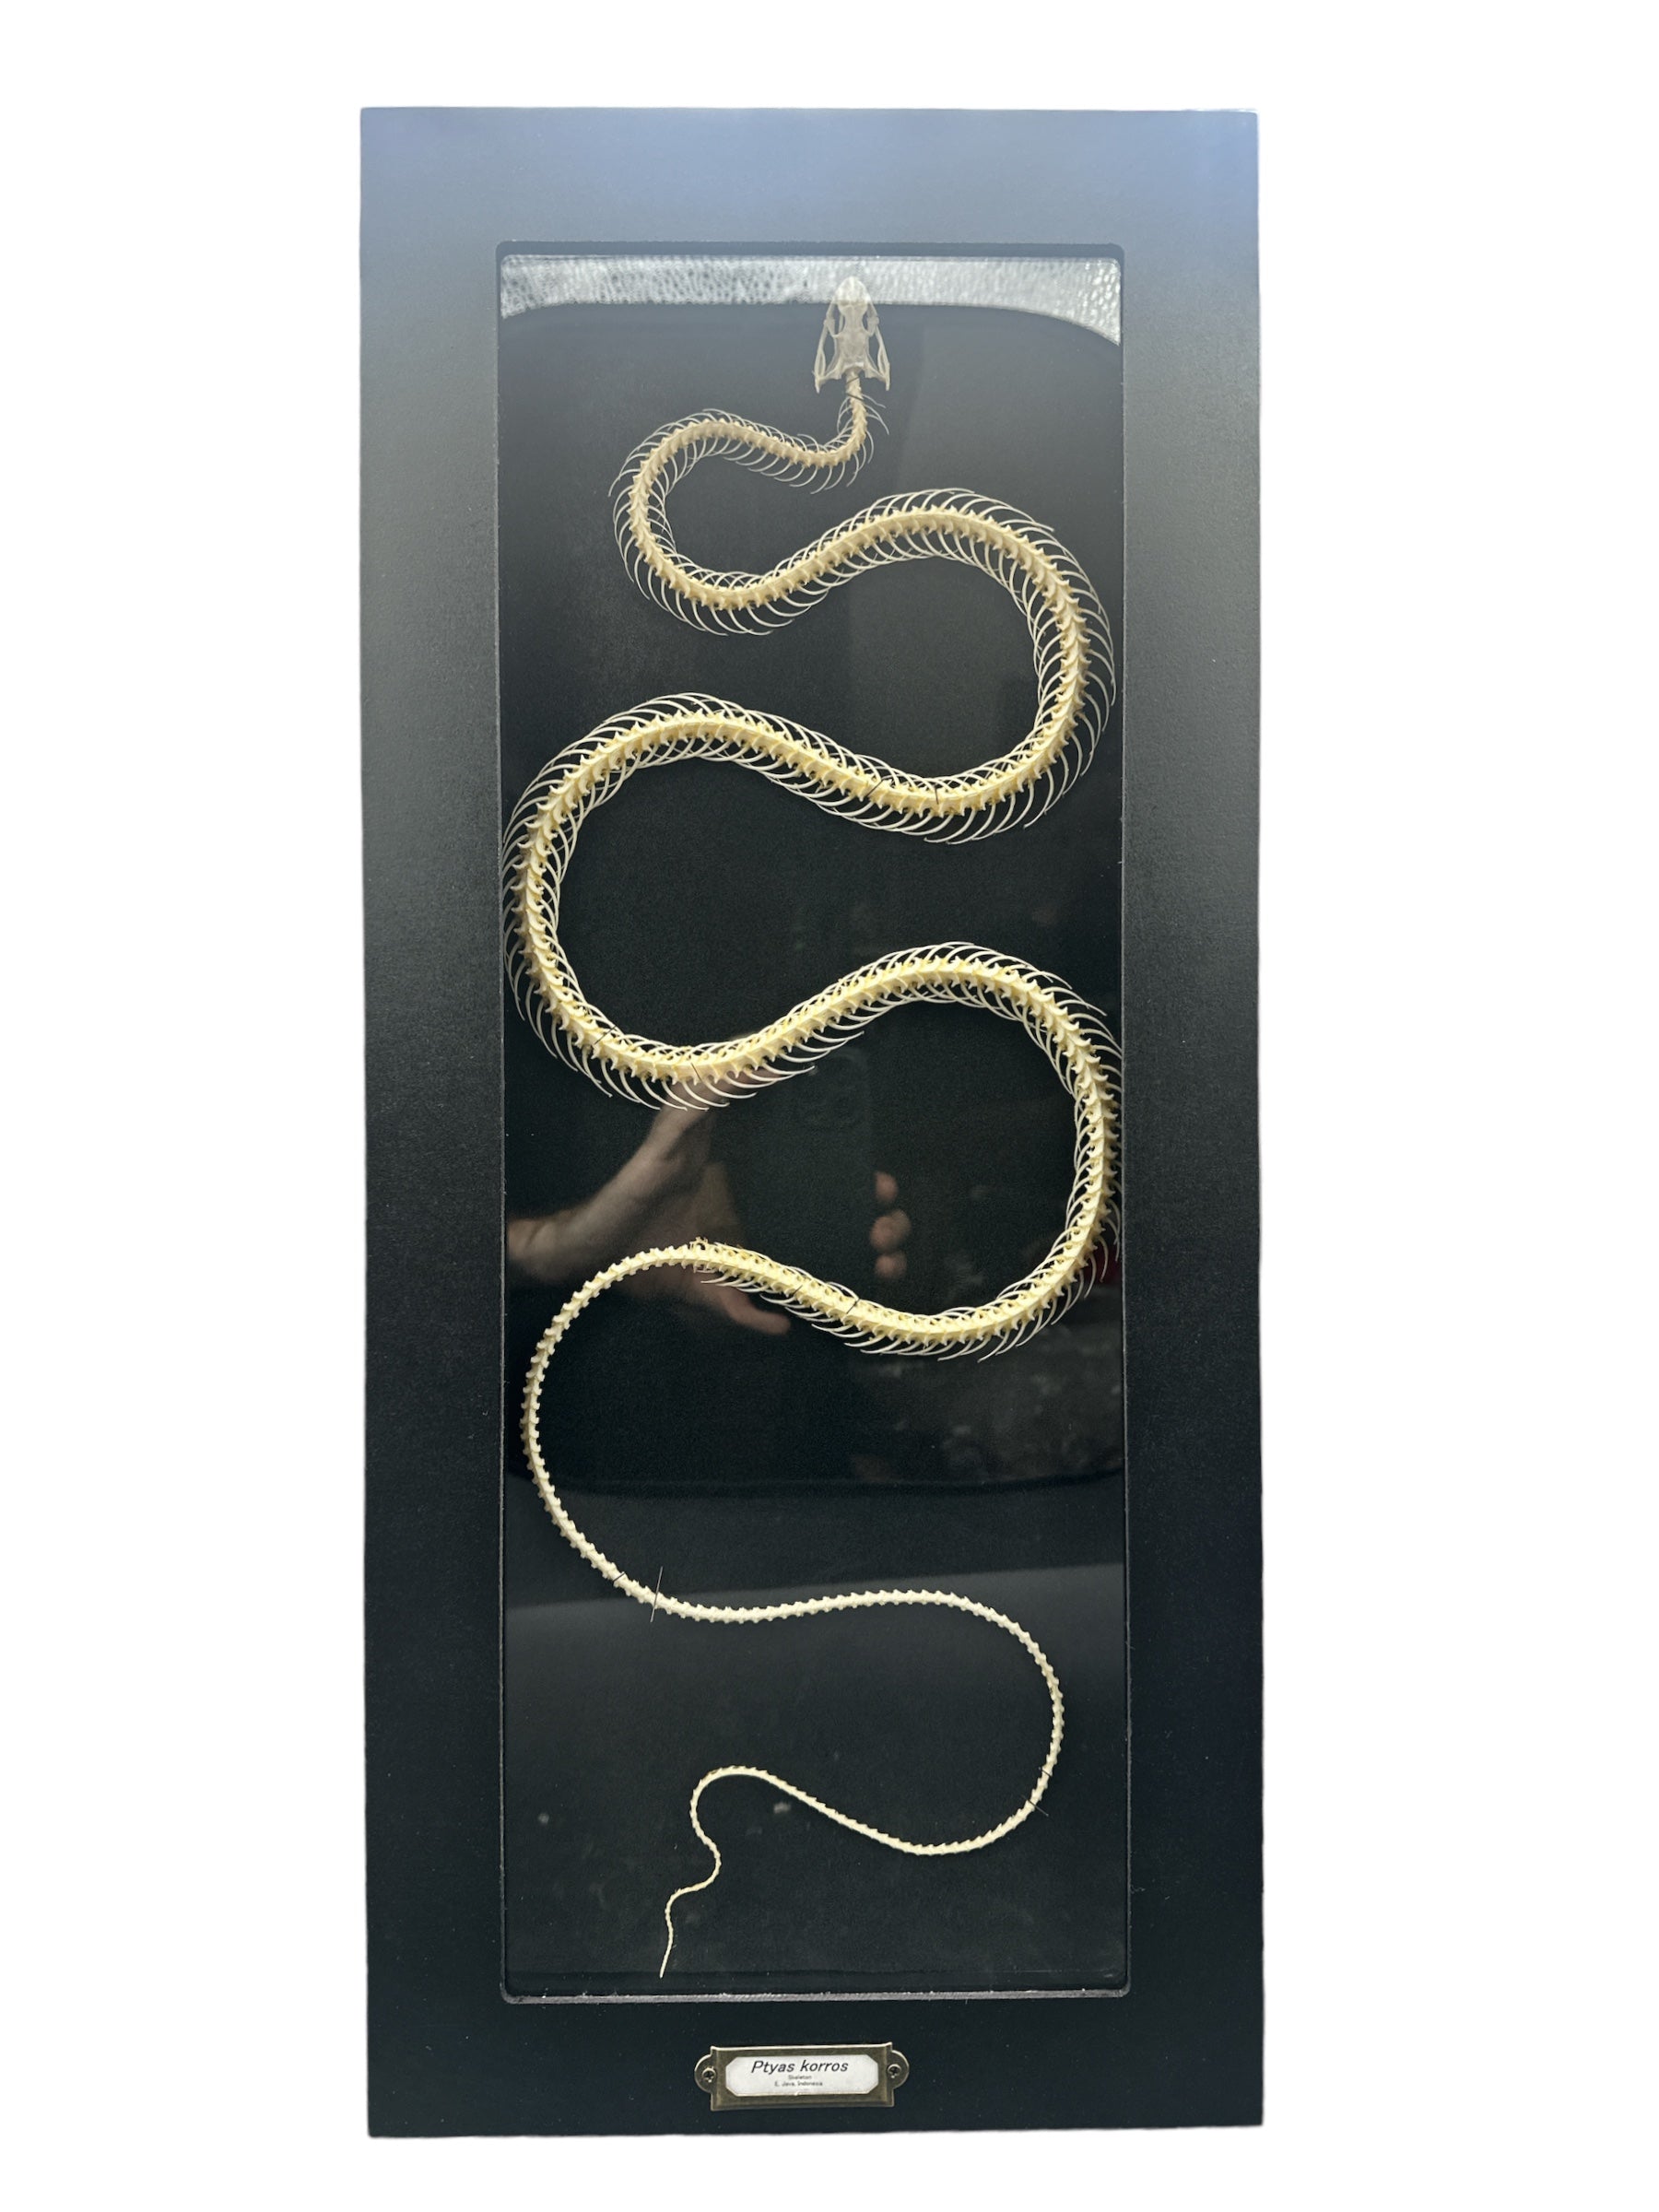 Indo-Chinese Rat Snake - Skeleton (Ptyas korros) - 6x19" Frame